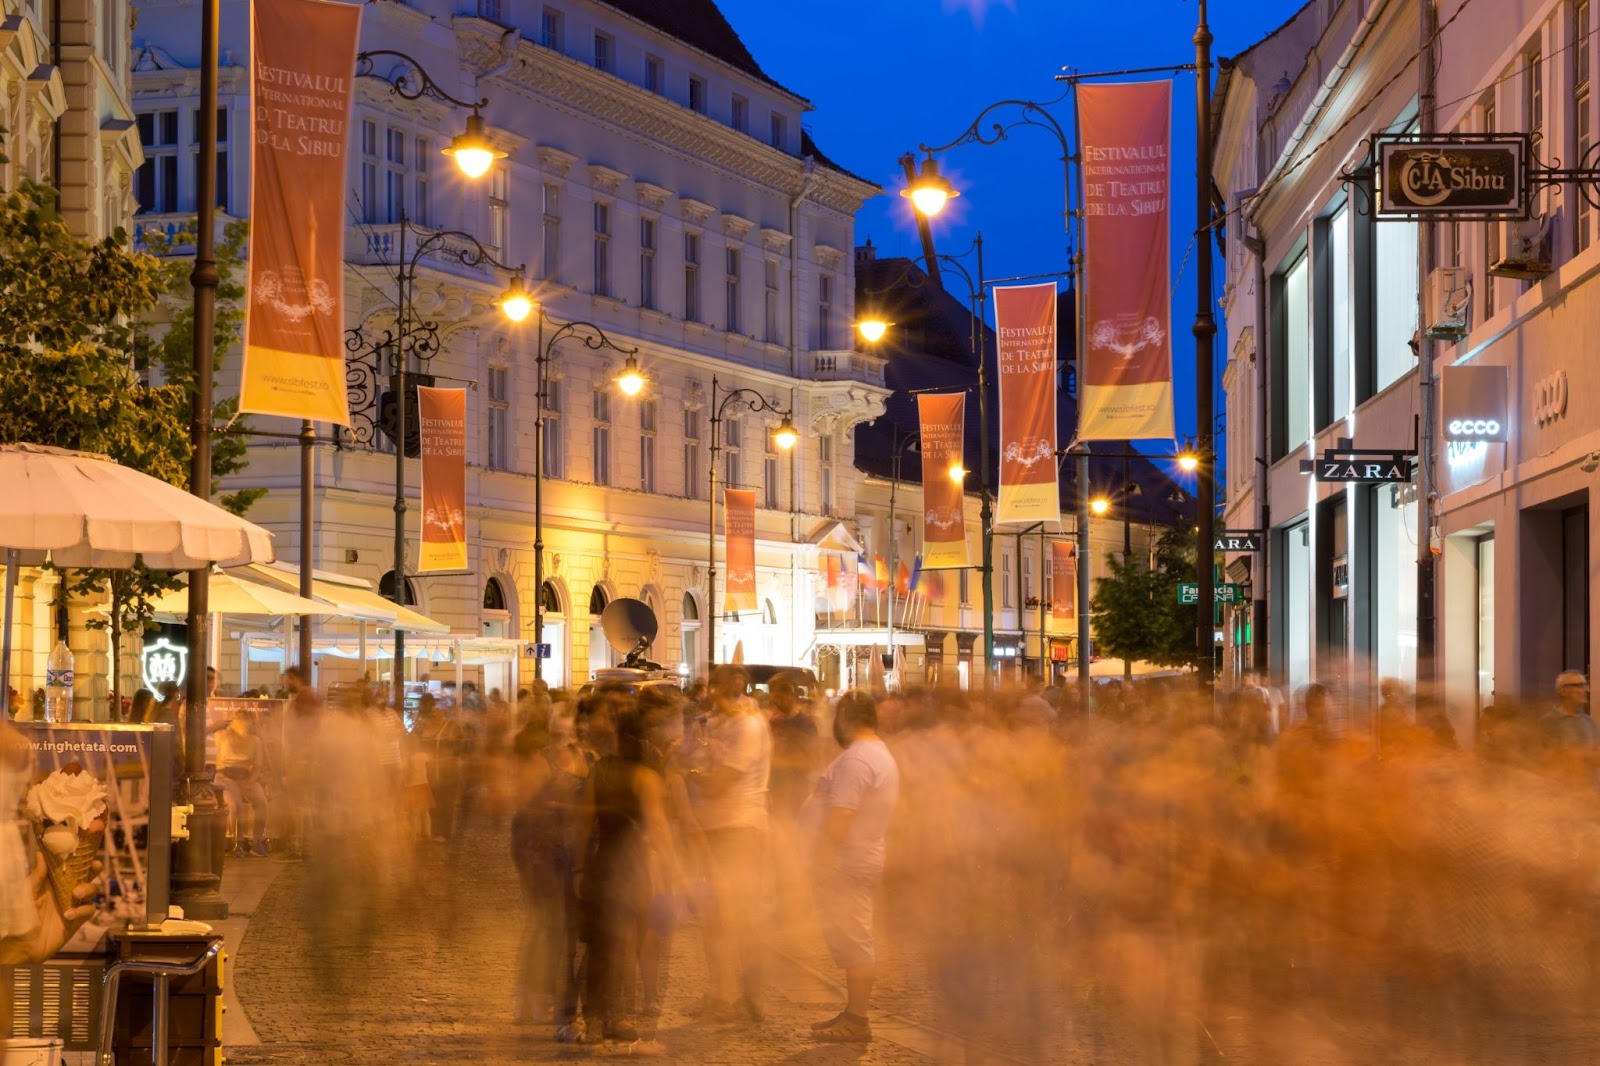 People passing by on a pedestrian walkway during Sibiu International Theatre Festival, Sibiu, Romania